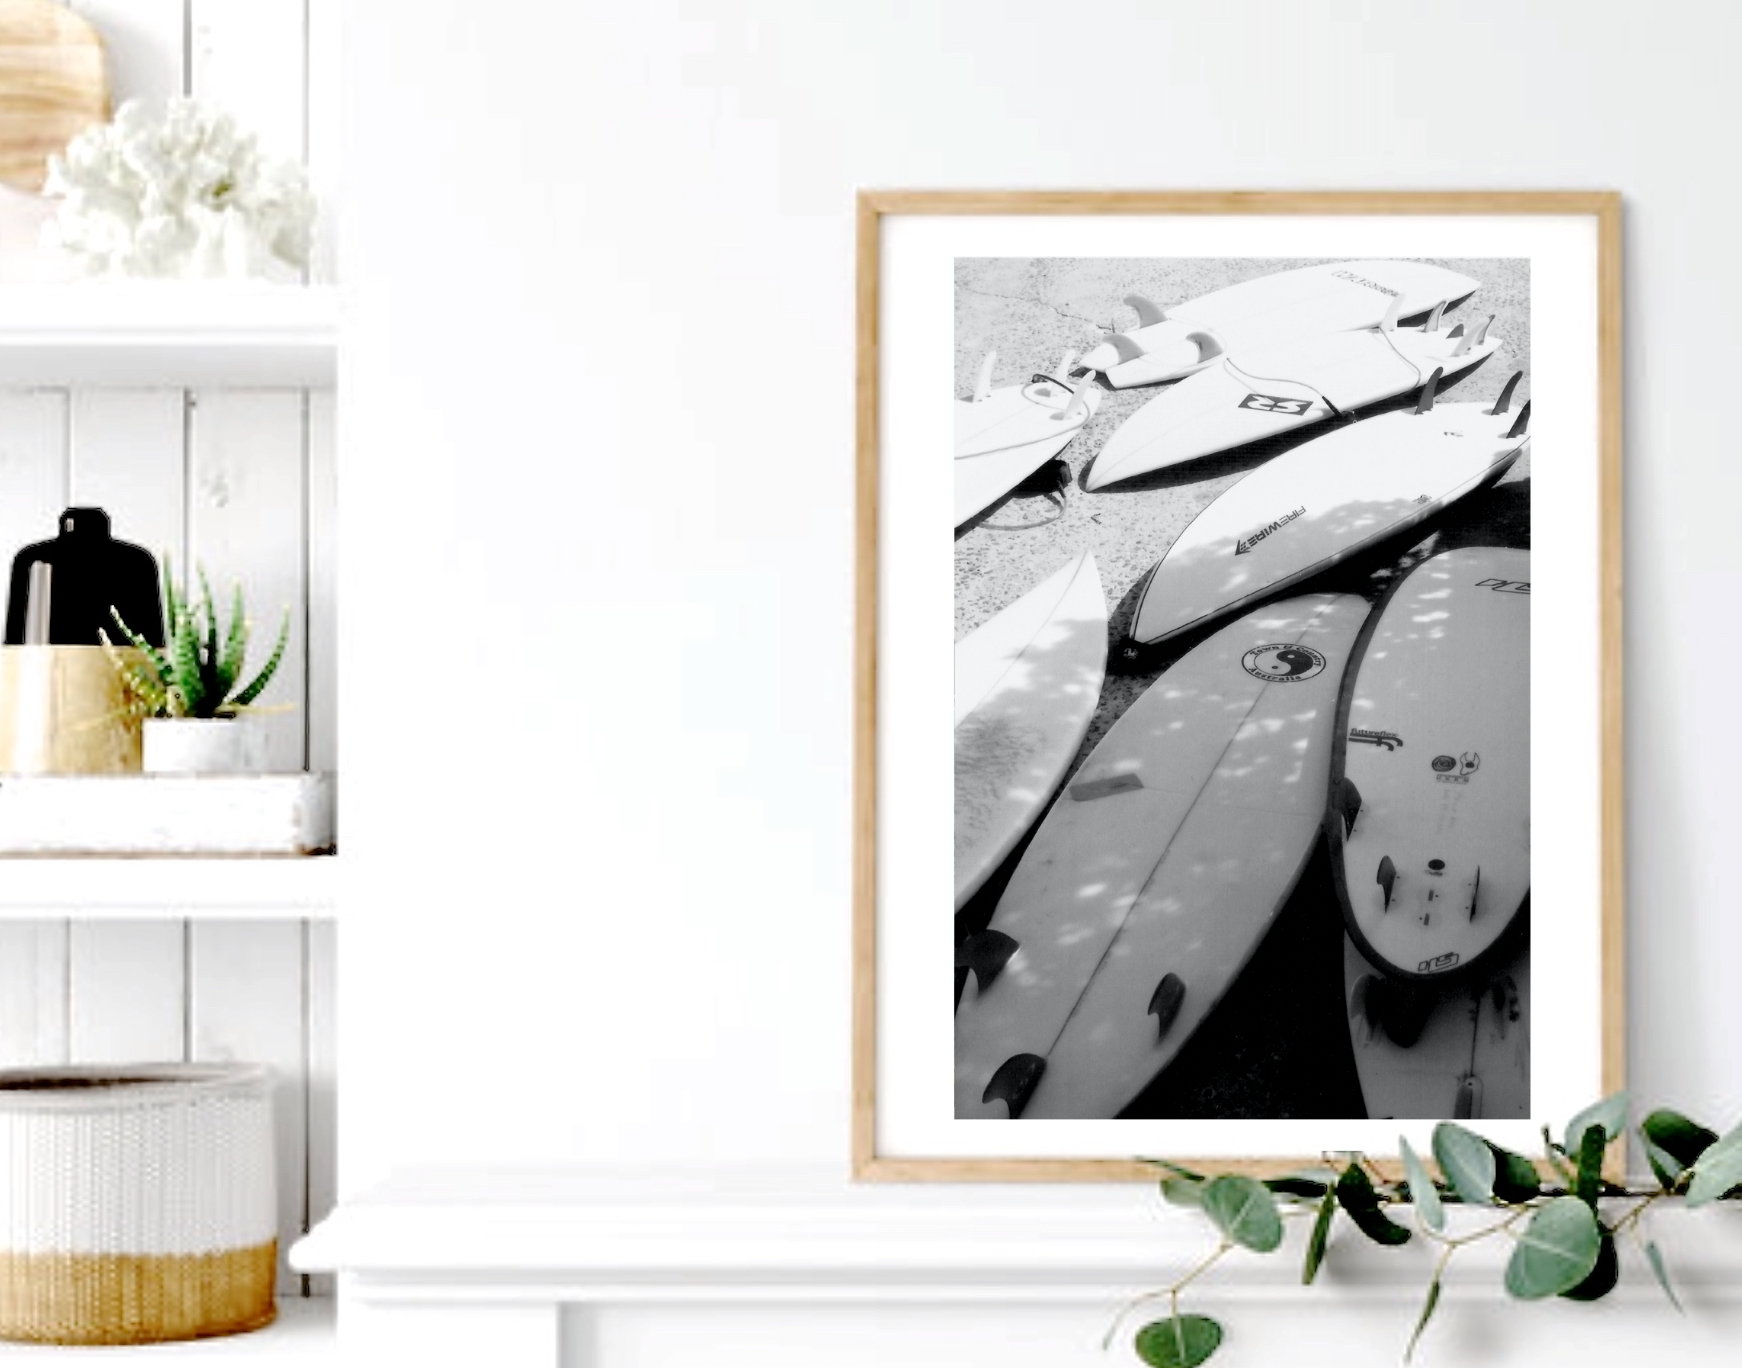 Surfboard at Bronte Beach • 35mm Black & White Film Photography Print